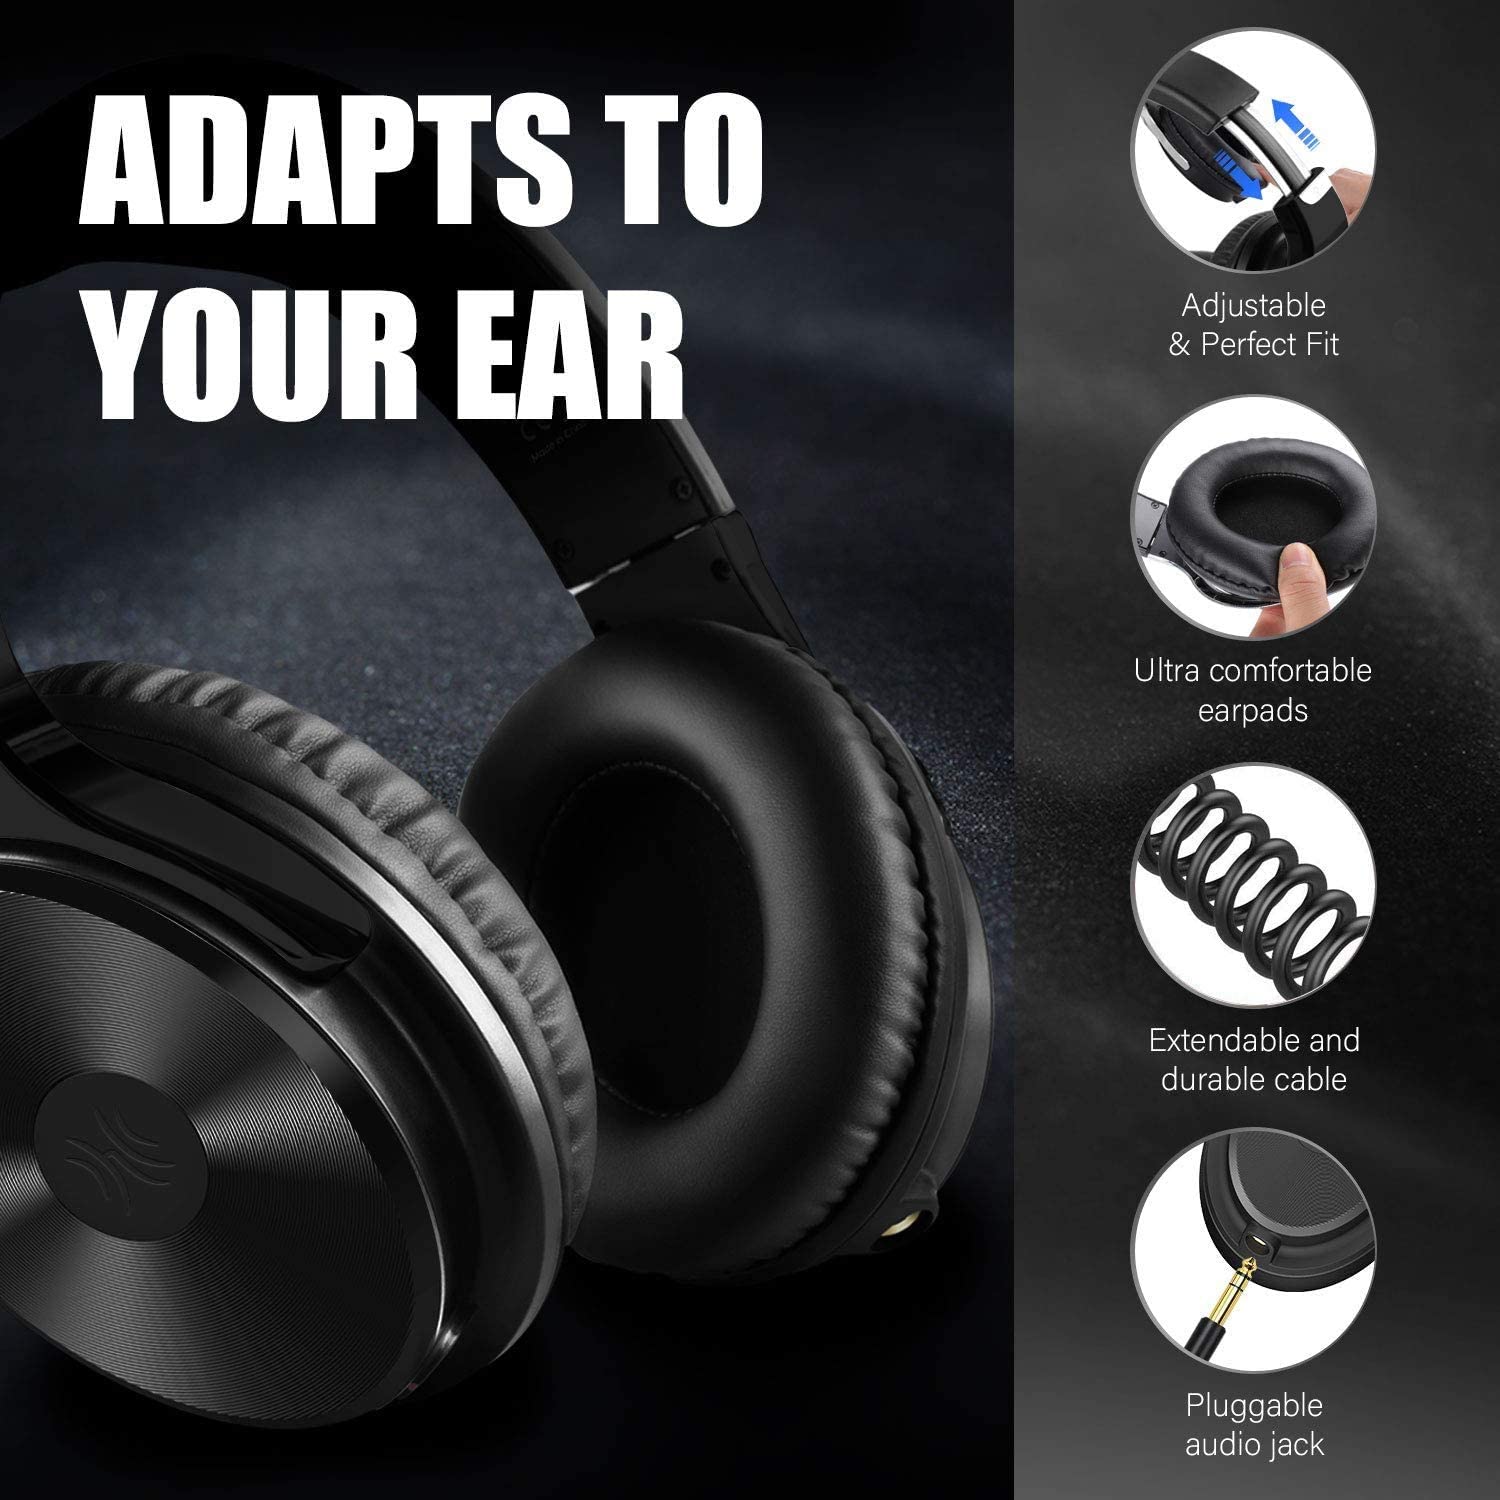 OneOdio Over Ear Headphone Wired Hi-Fi Studio Headphones 50mm Speaker 1/4 inch Jack Adapter Closed-Back Headphones